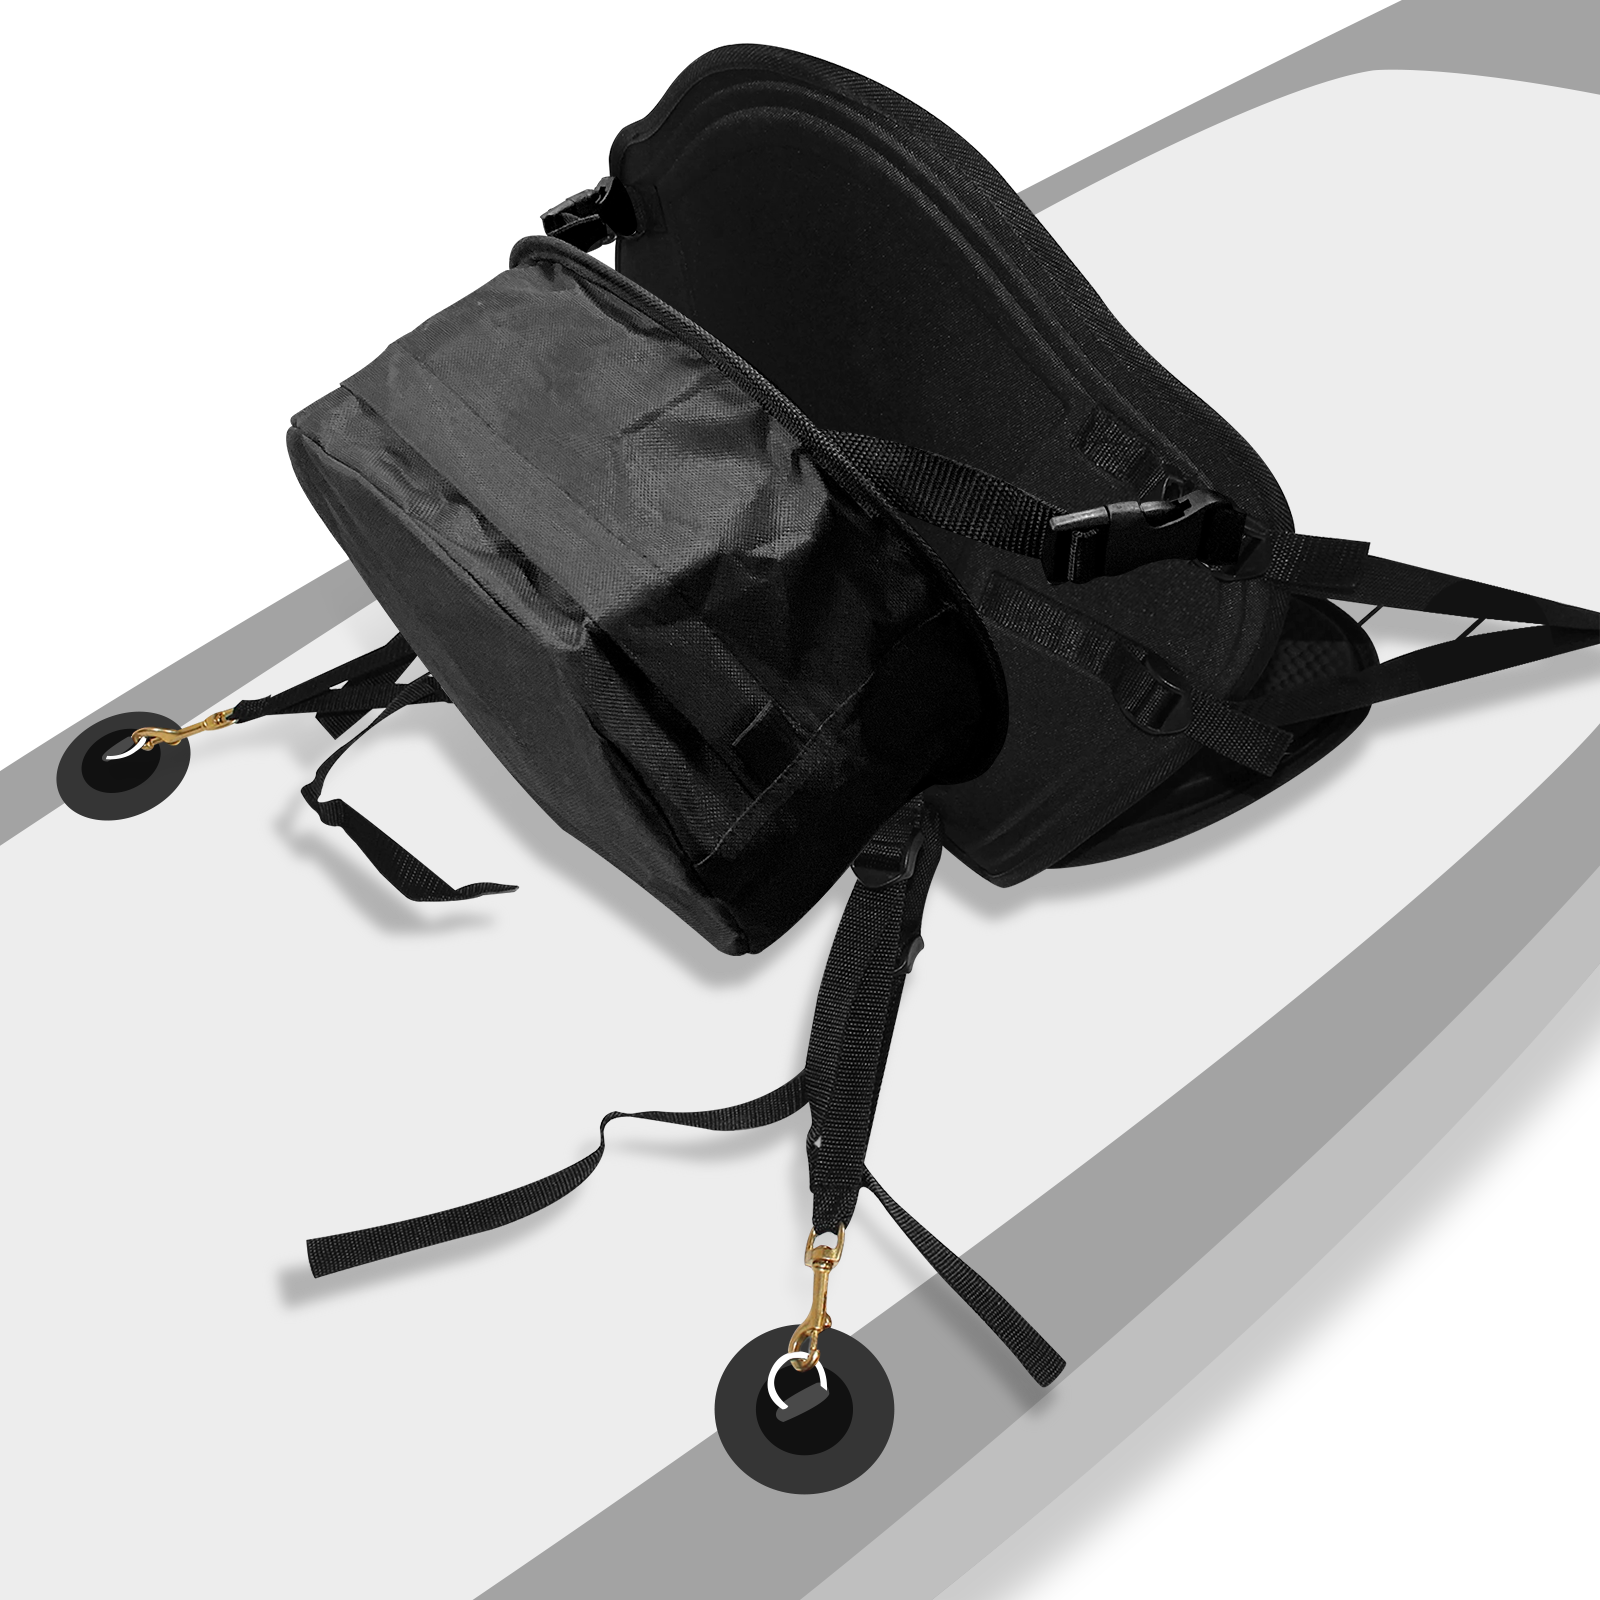 Paddle board adjustable boat Seat 